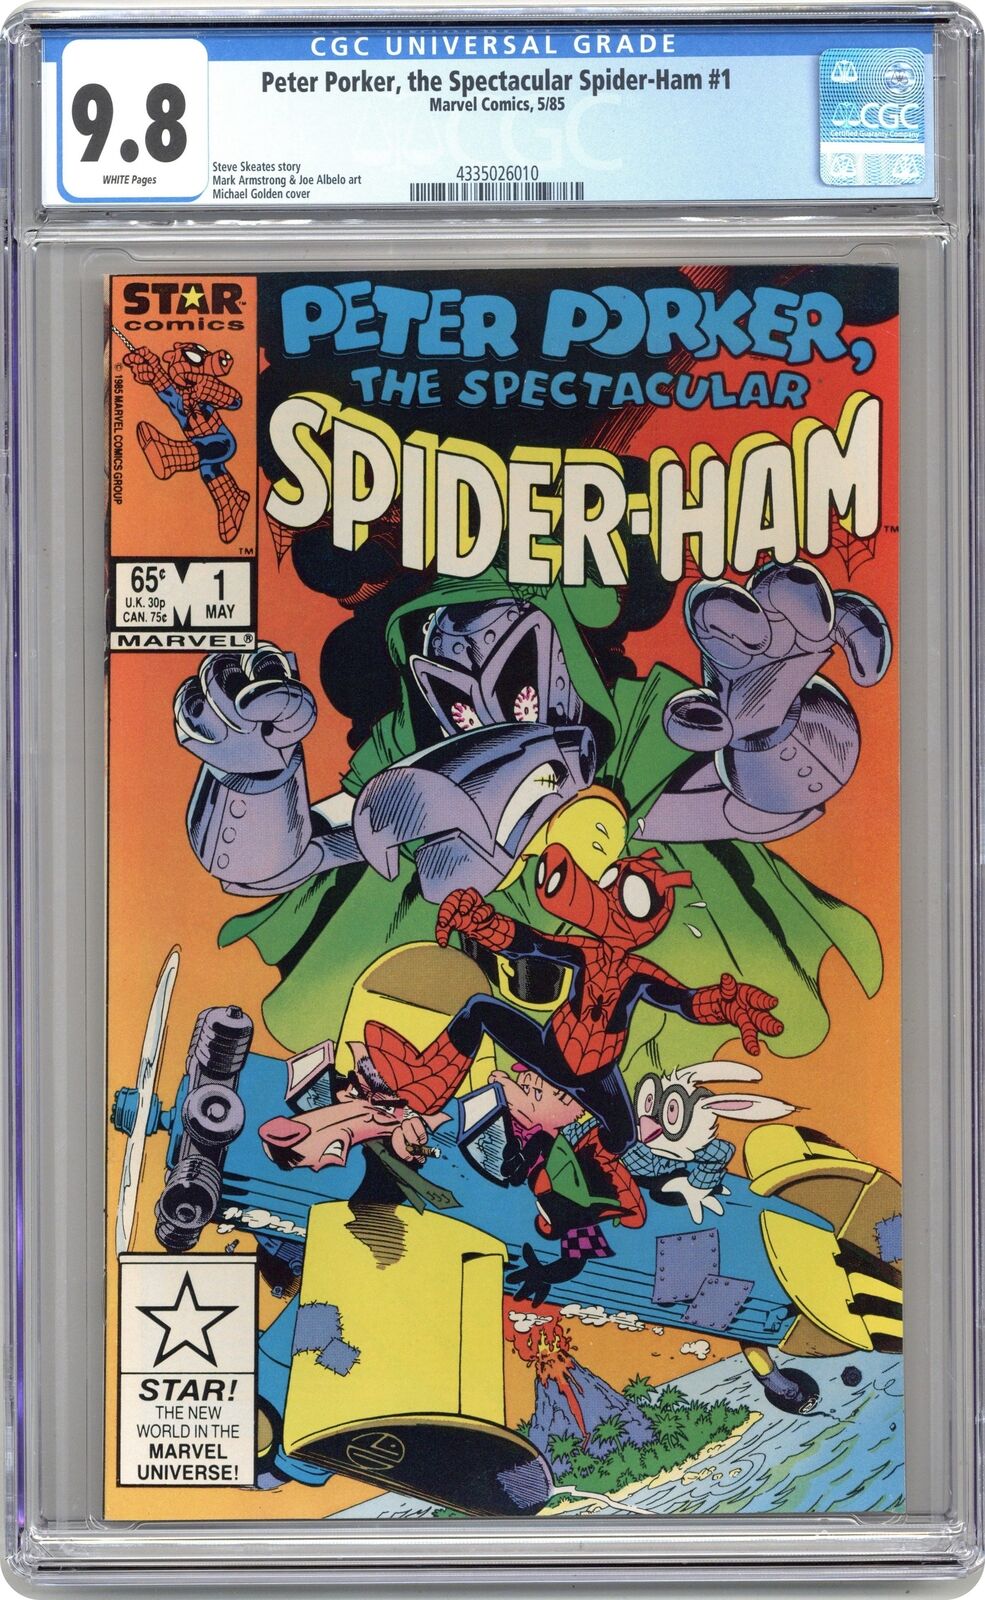 Peter Porker the Spectacular Spider-Ham #1 CGC 9.8 1985 4335026010